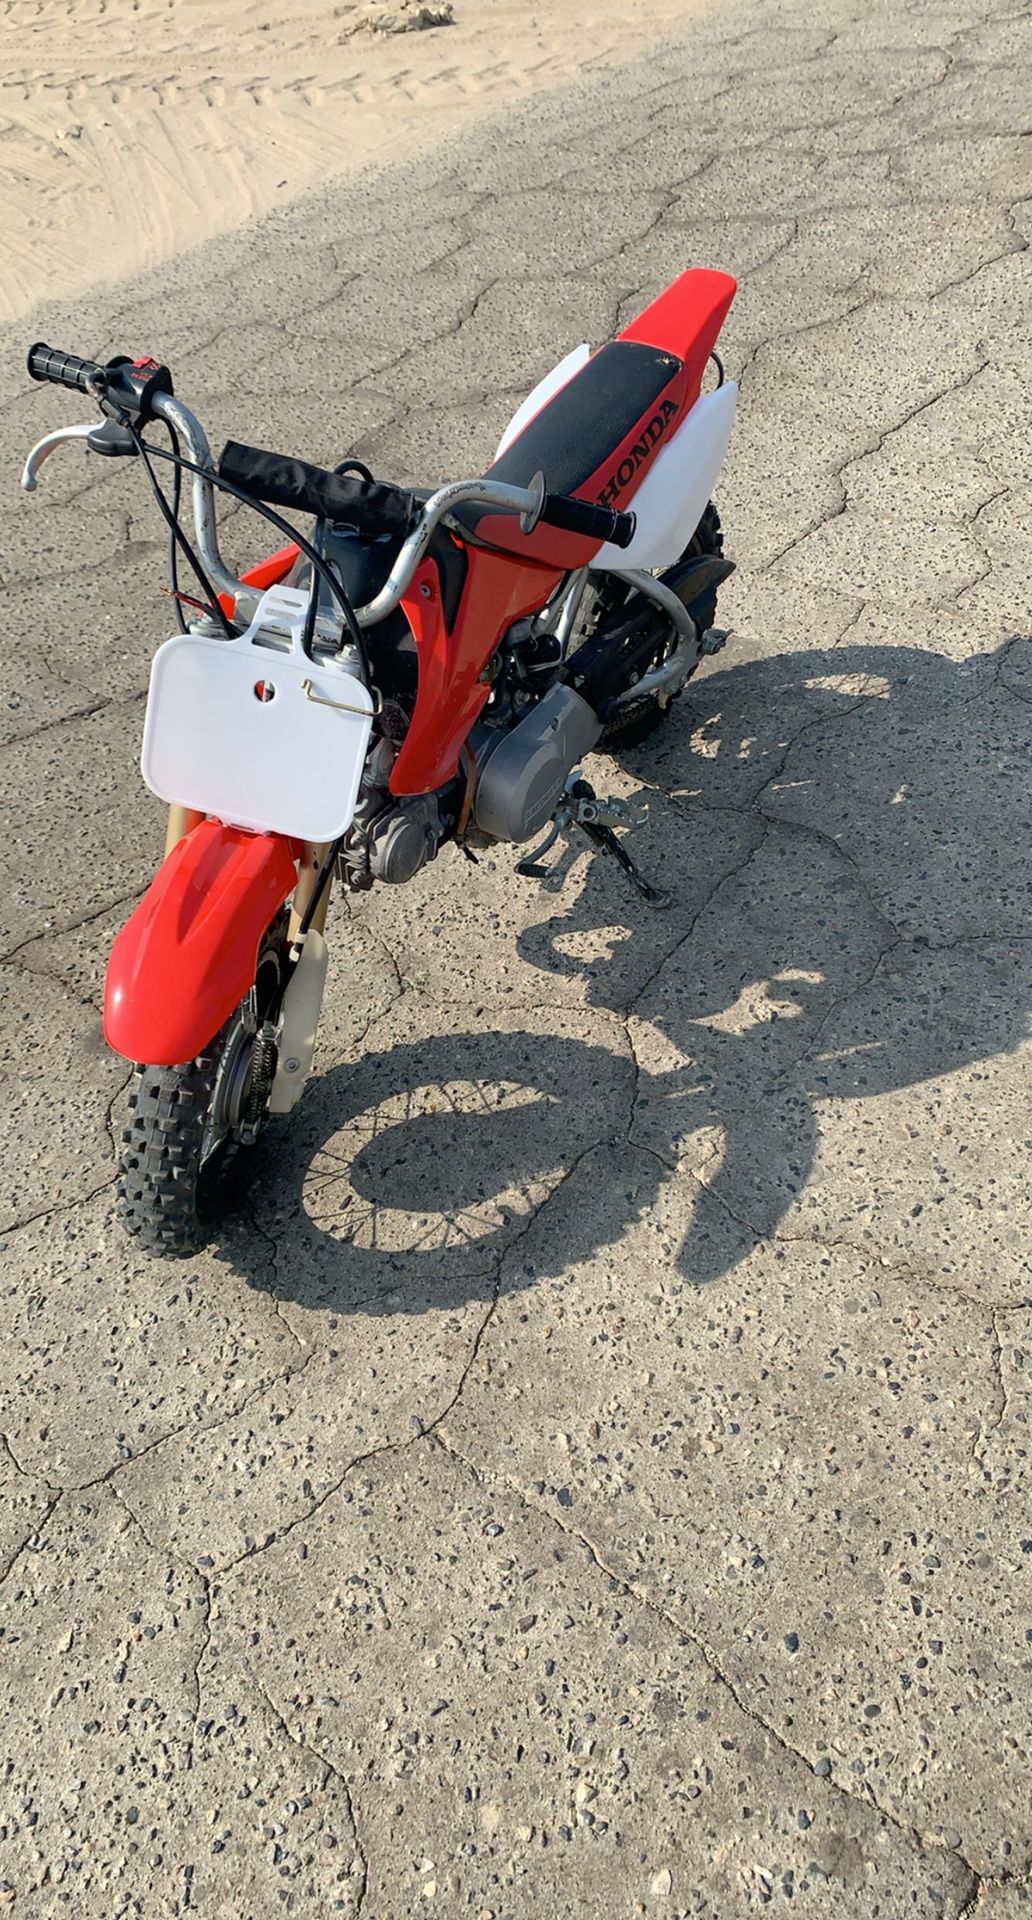 Crf 50 Honda Dirt Bike